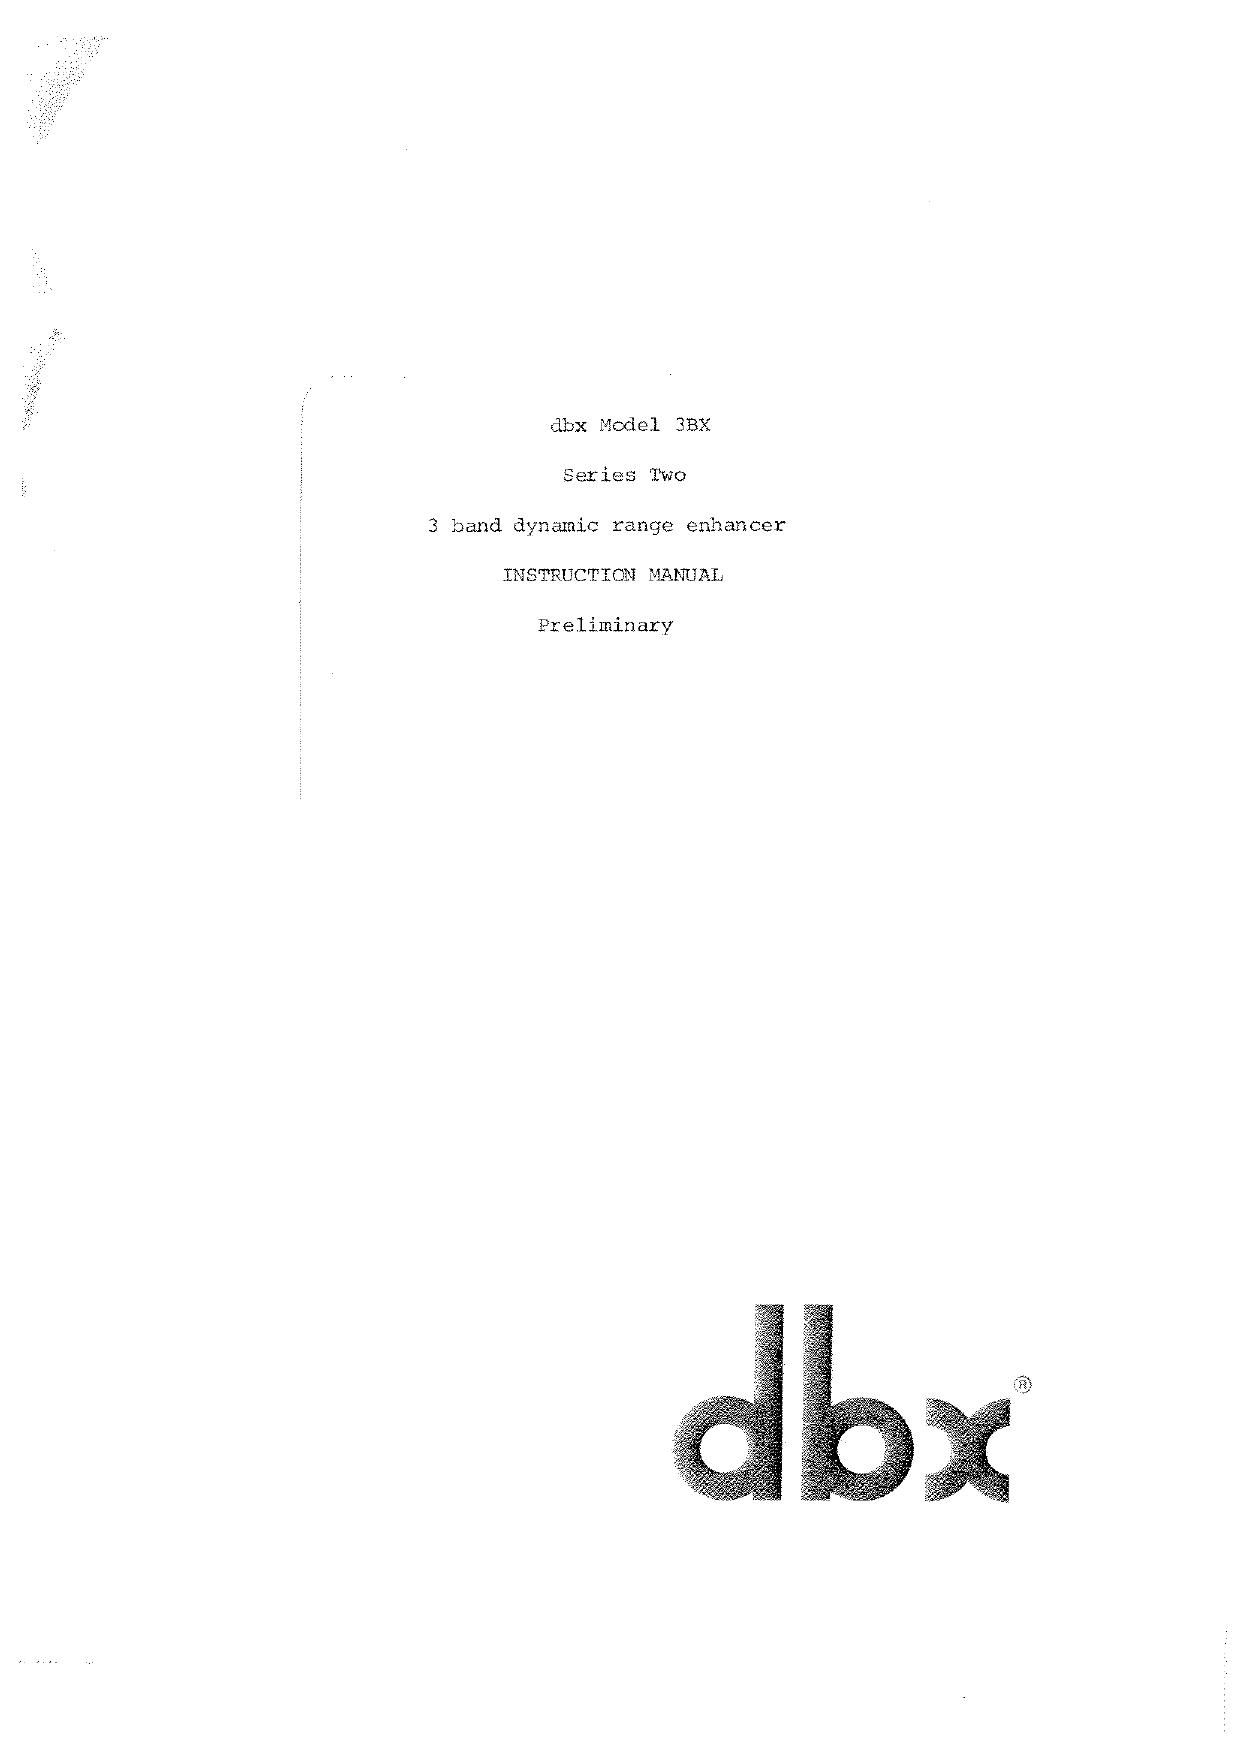 DBX 3bx II Owners Manual